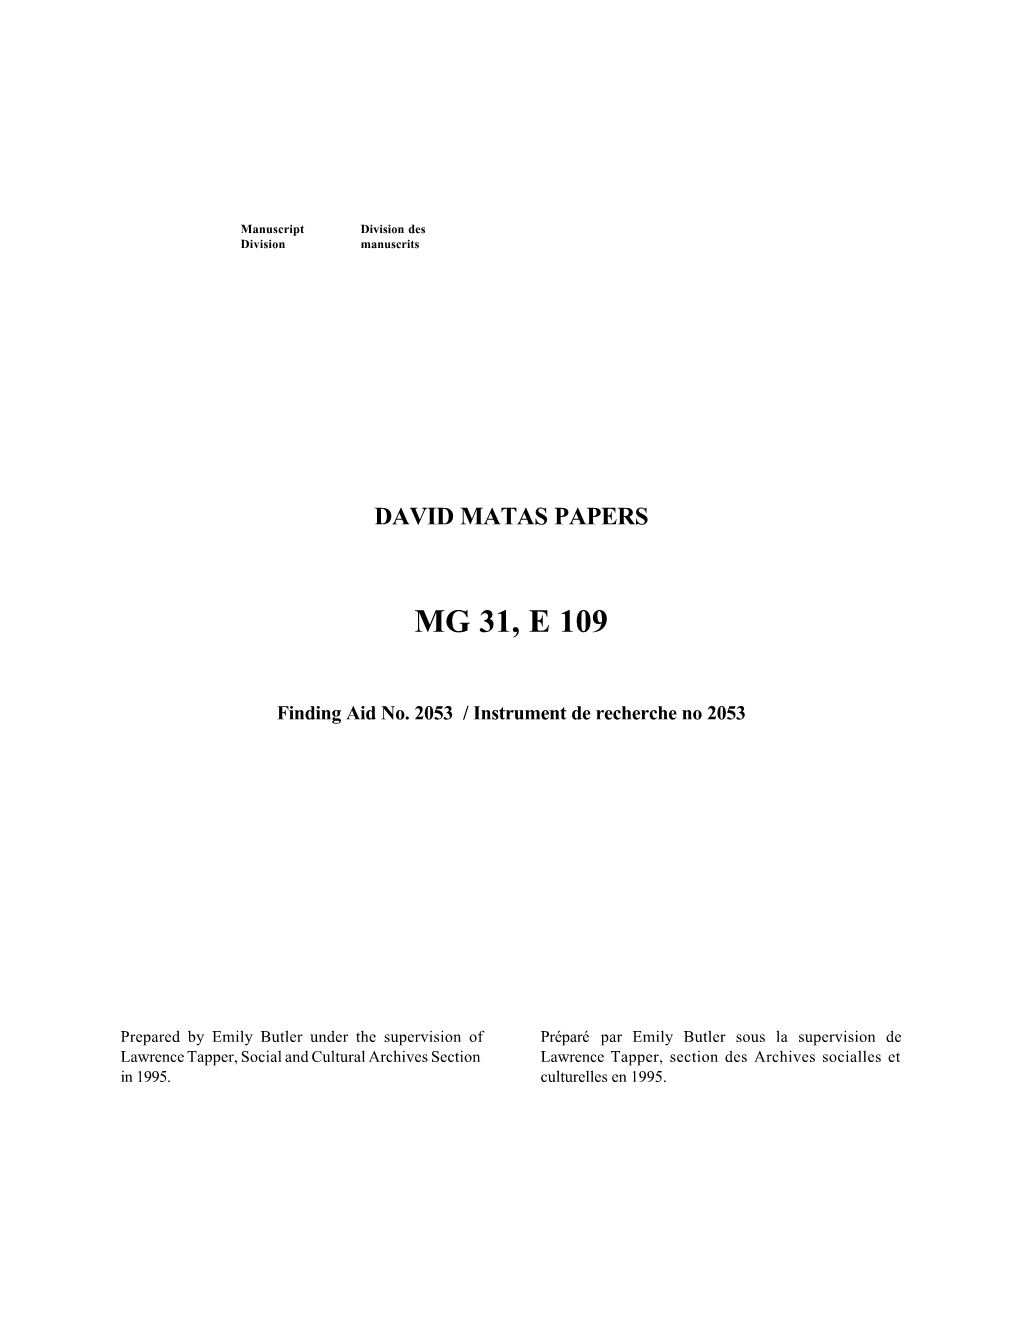 David Matas Papers Mg 31, E